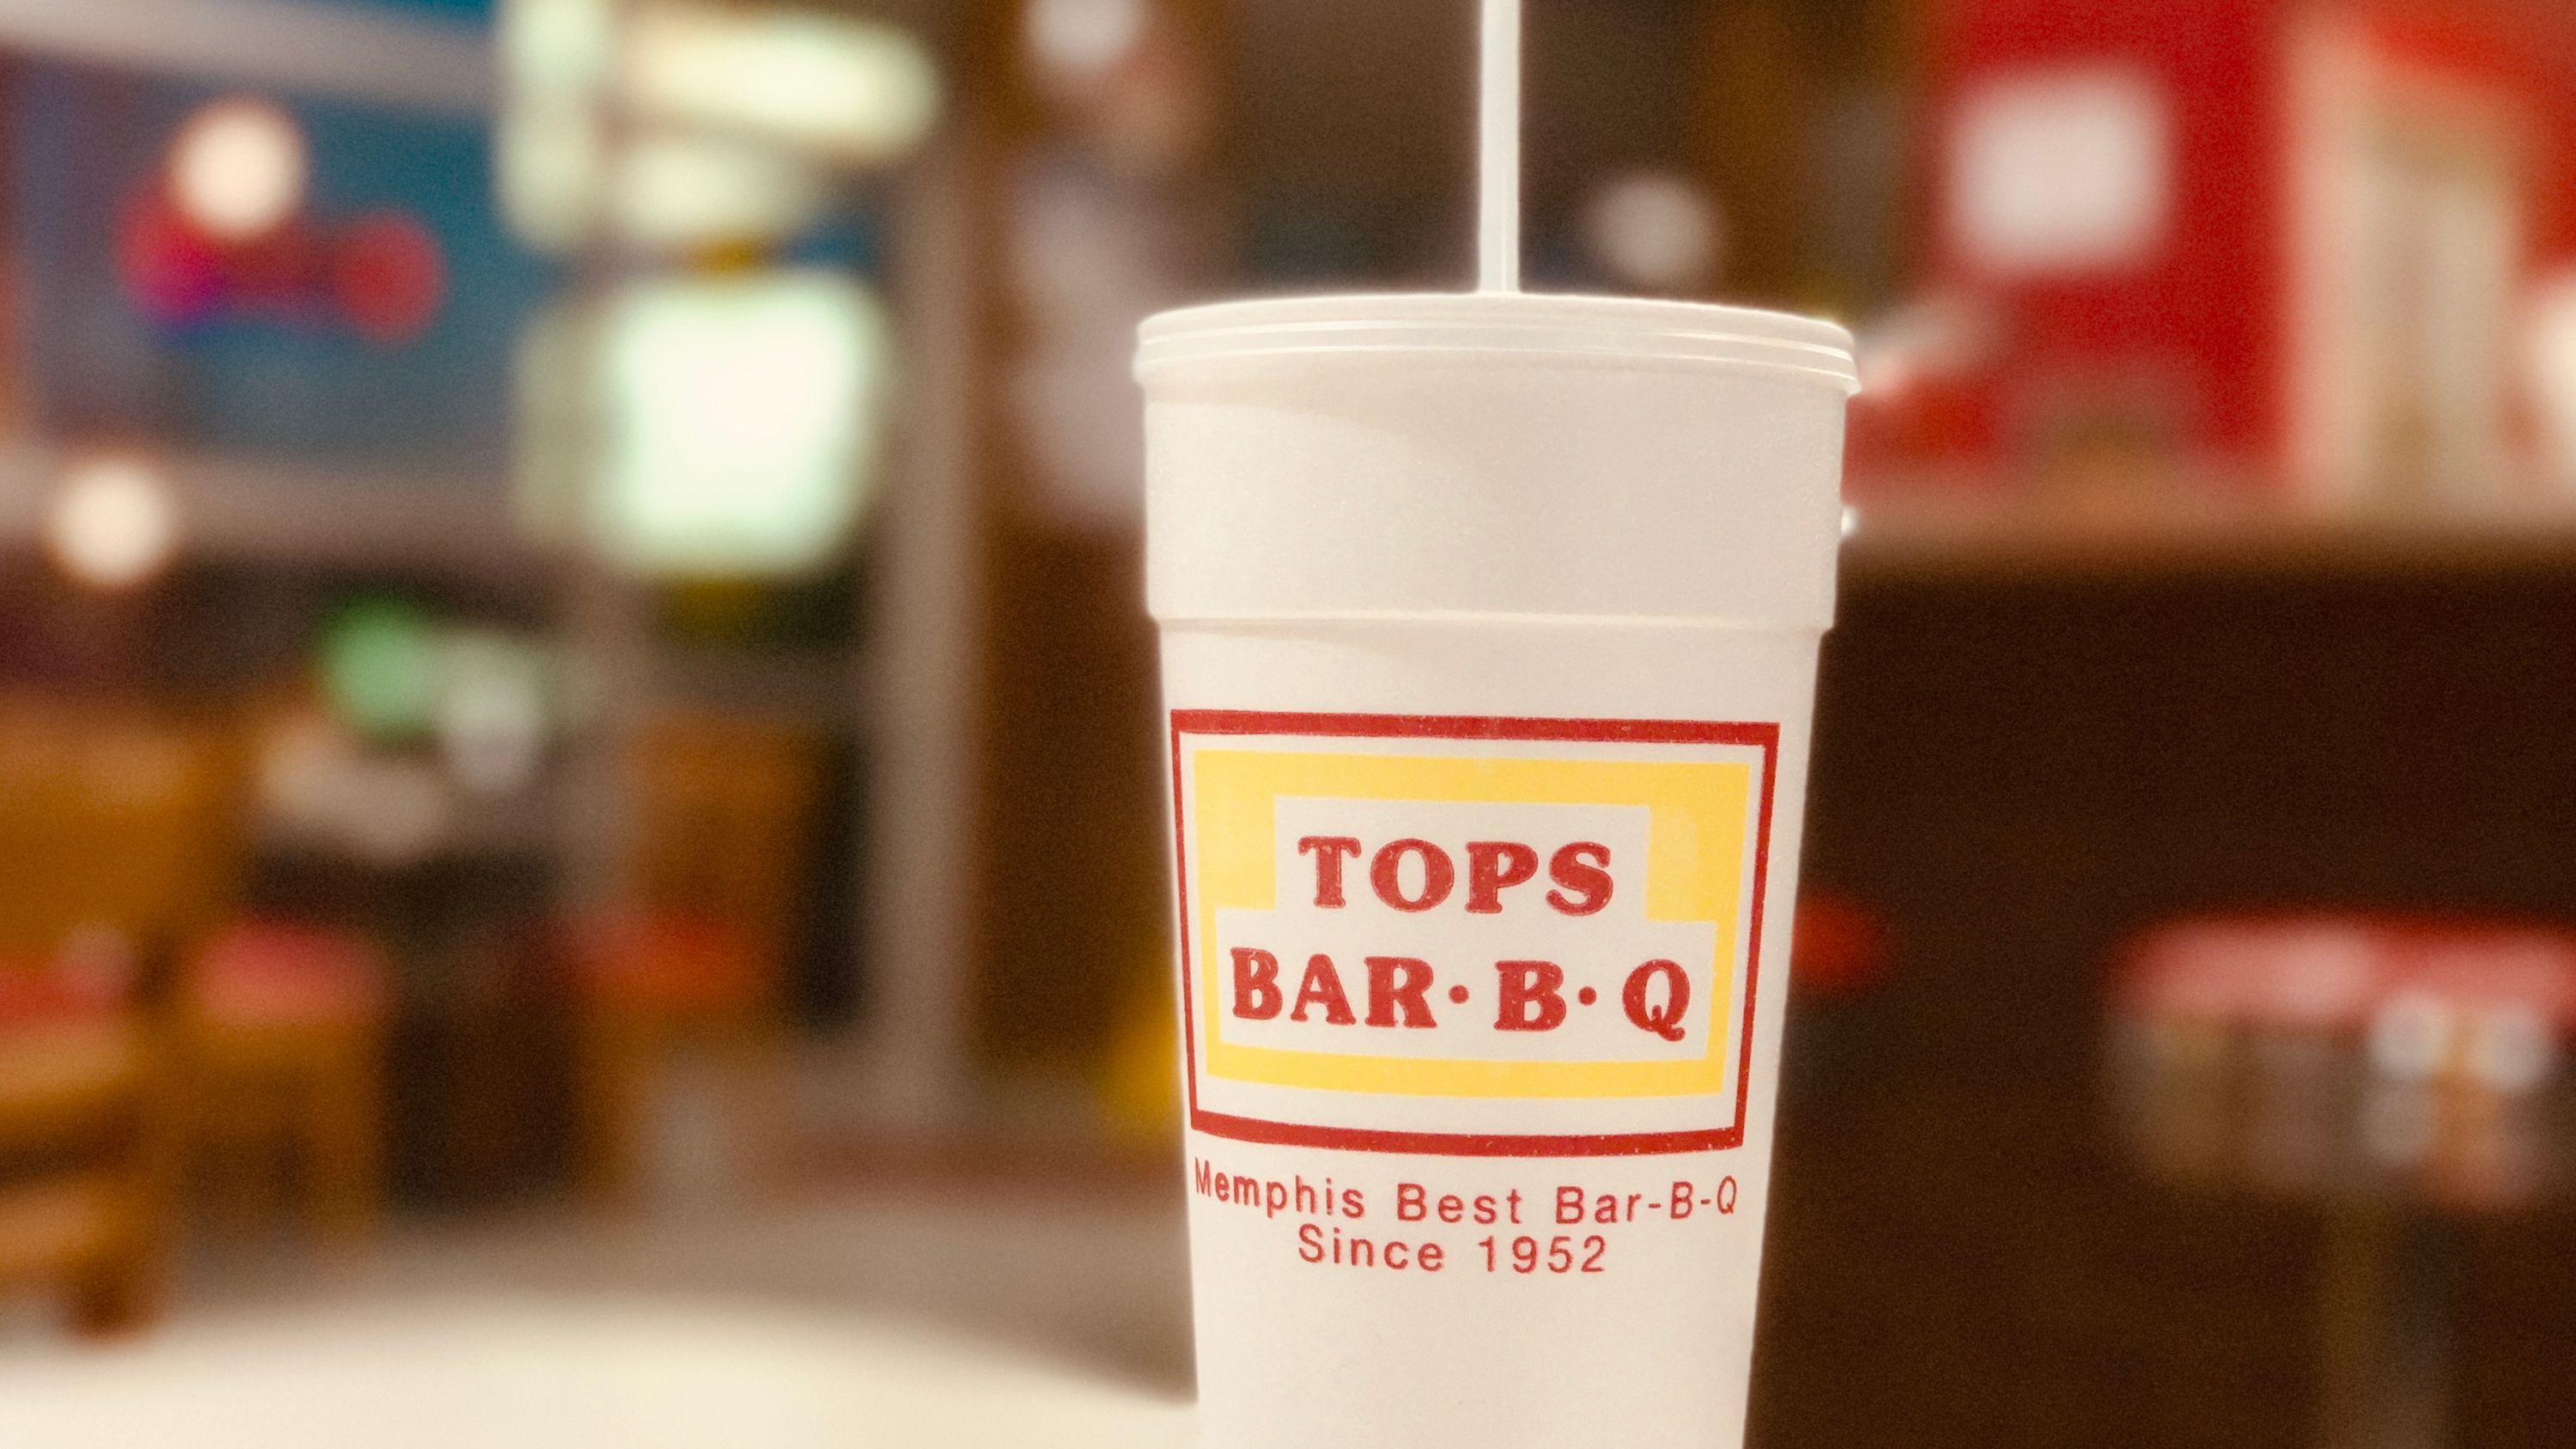 A cup of iced tea at Tops Bar-B-Q in Memphis, TN